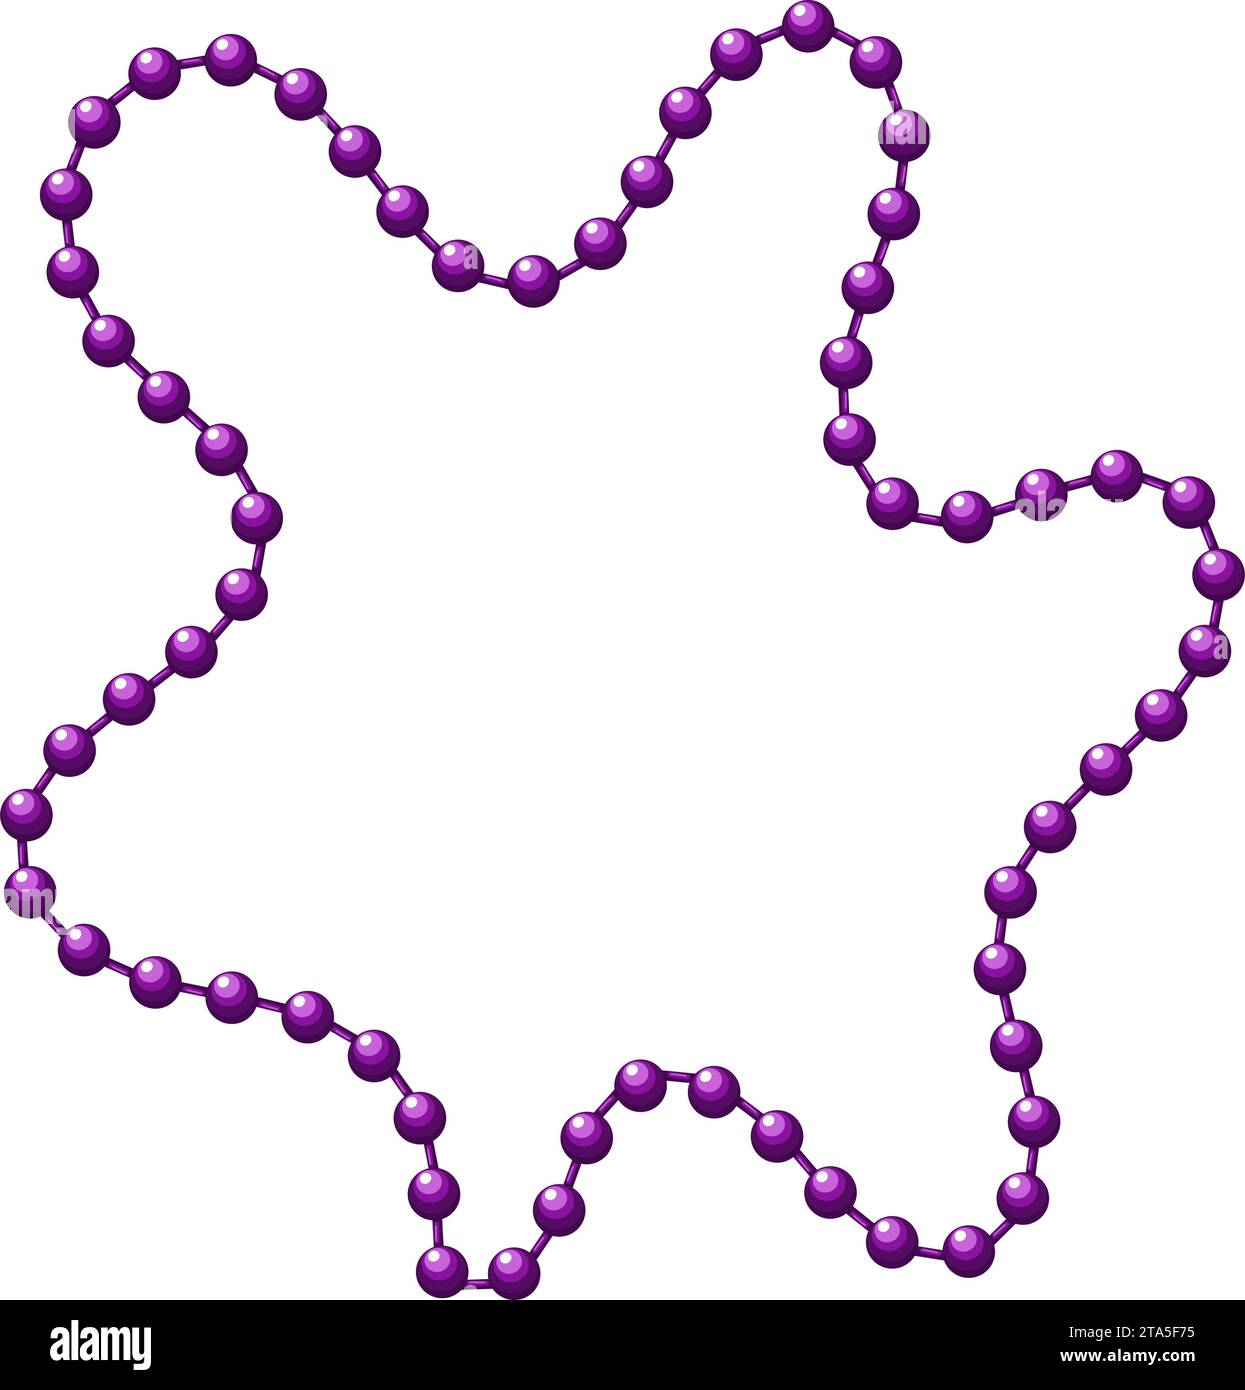 Mardi gras carnival beads. Vector illustration. Stock Vector